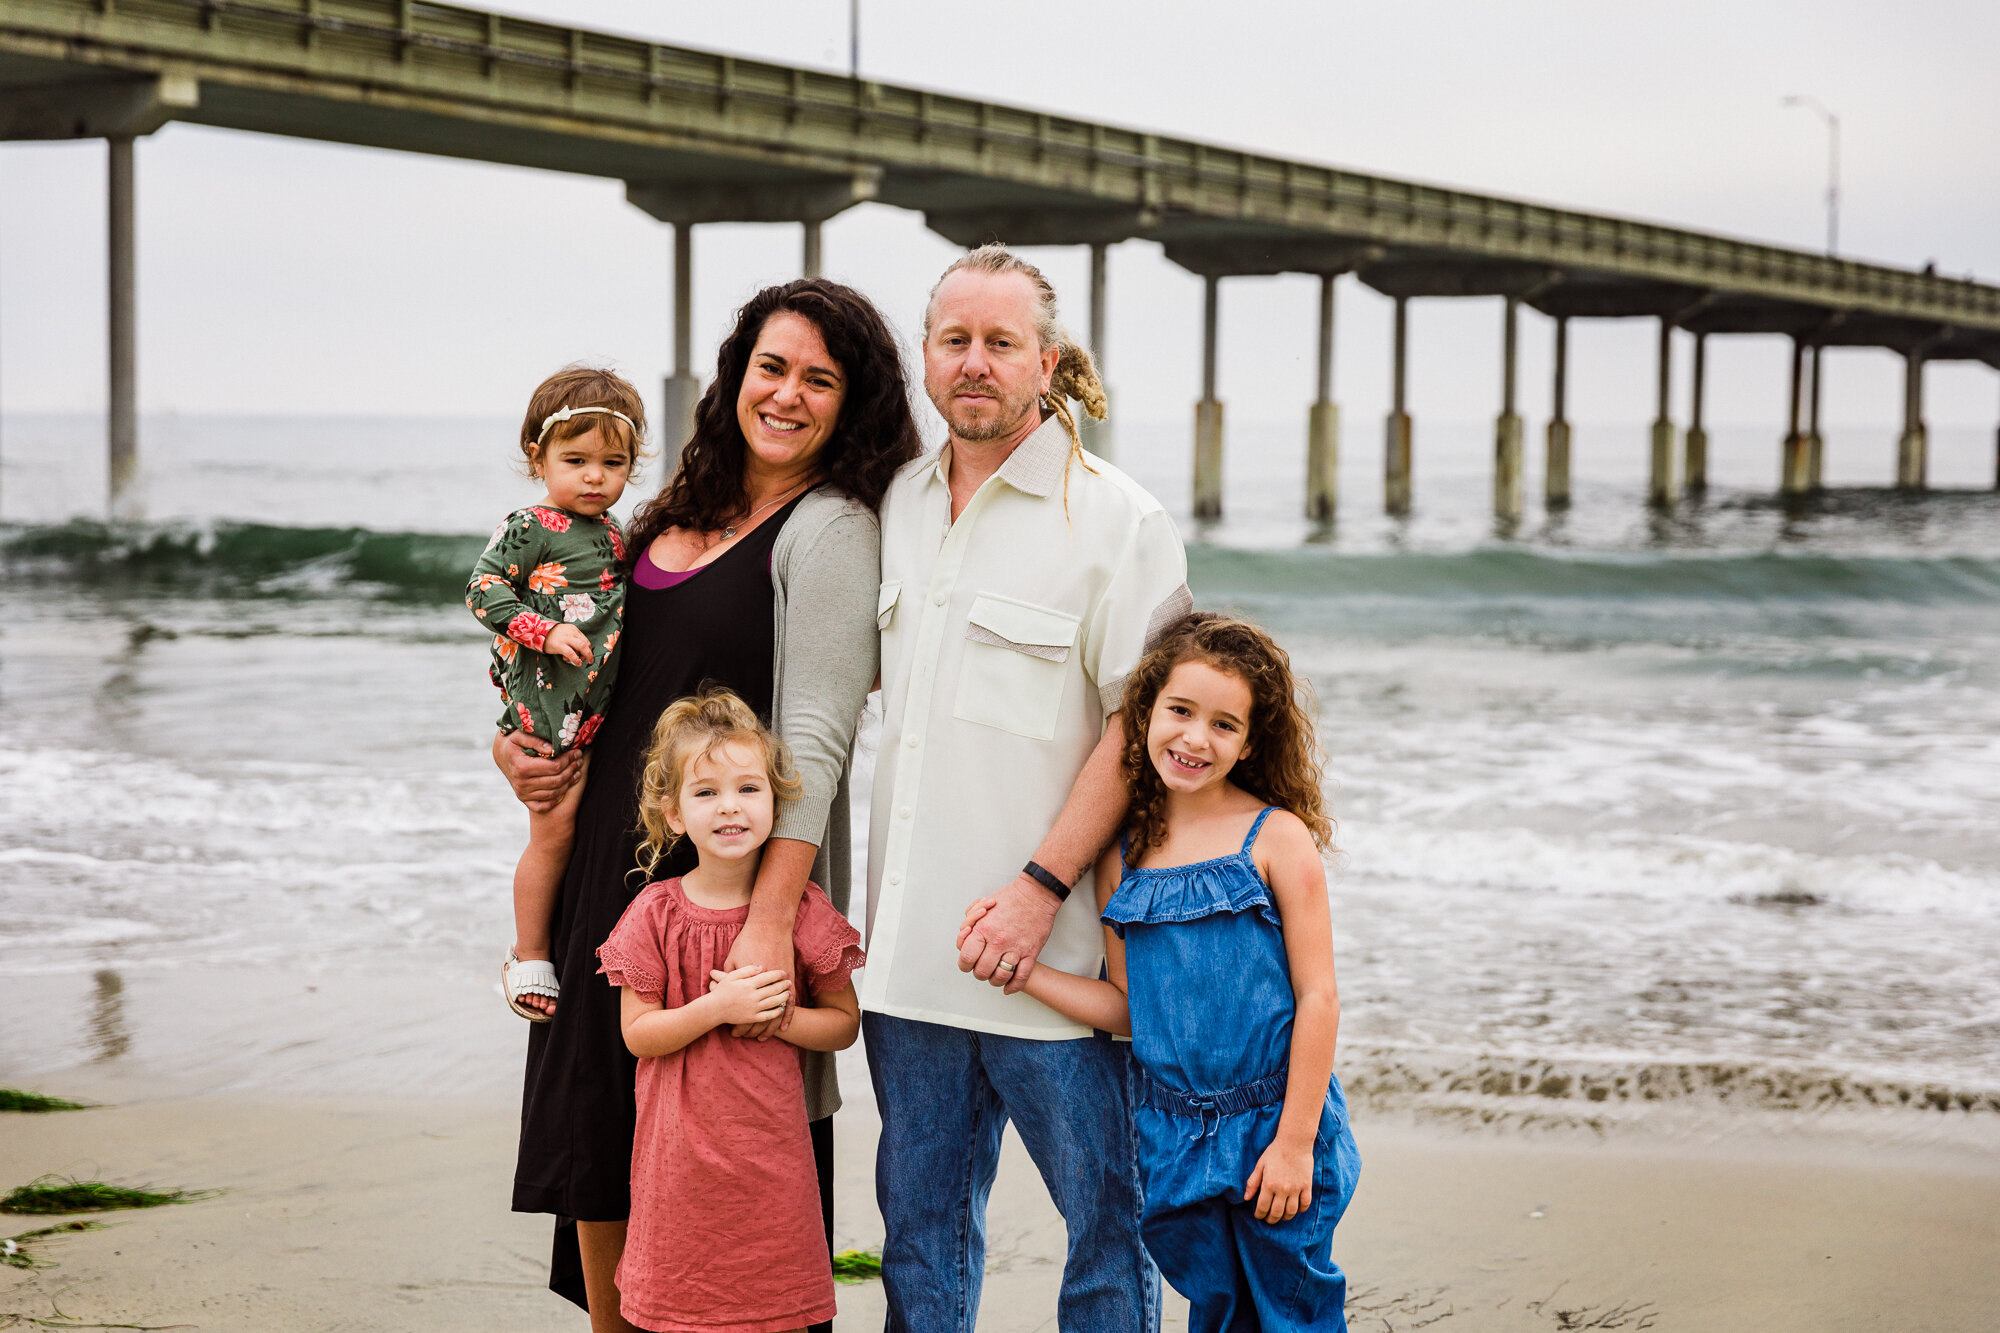 Family Portrait Photography Session at Ocean Beach Pier, San Diego, California-19.jpg